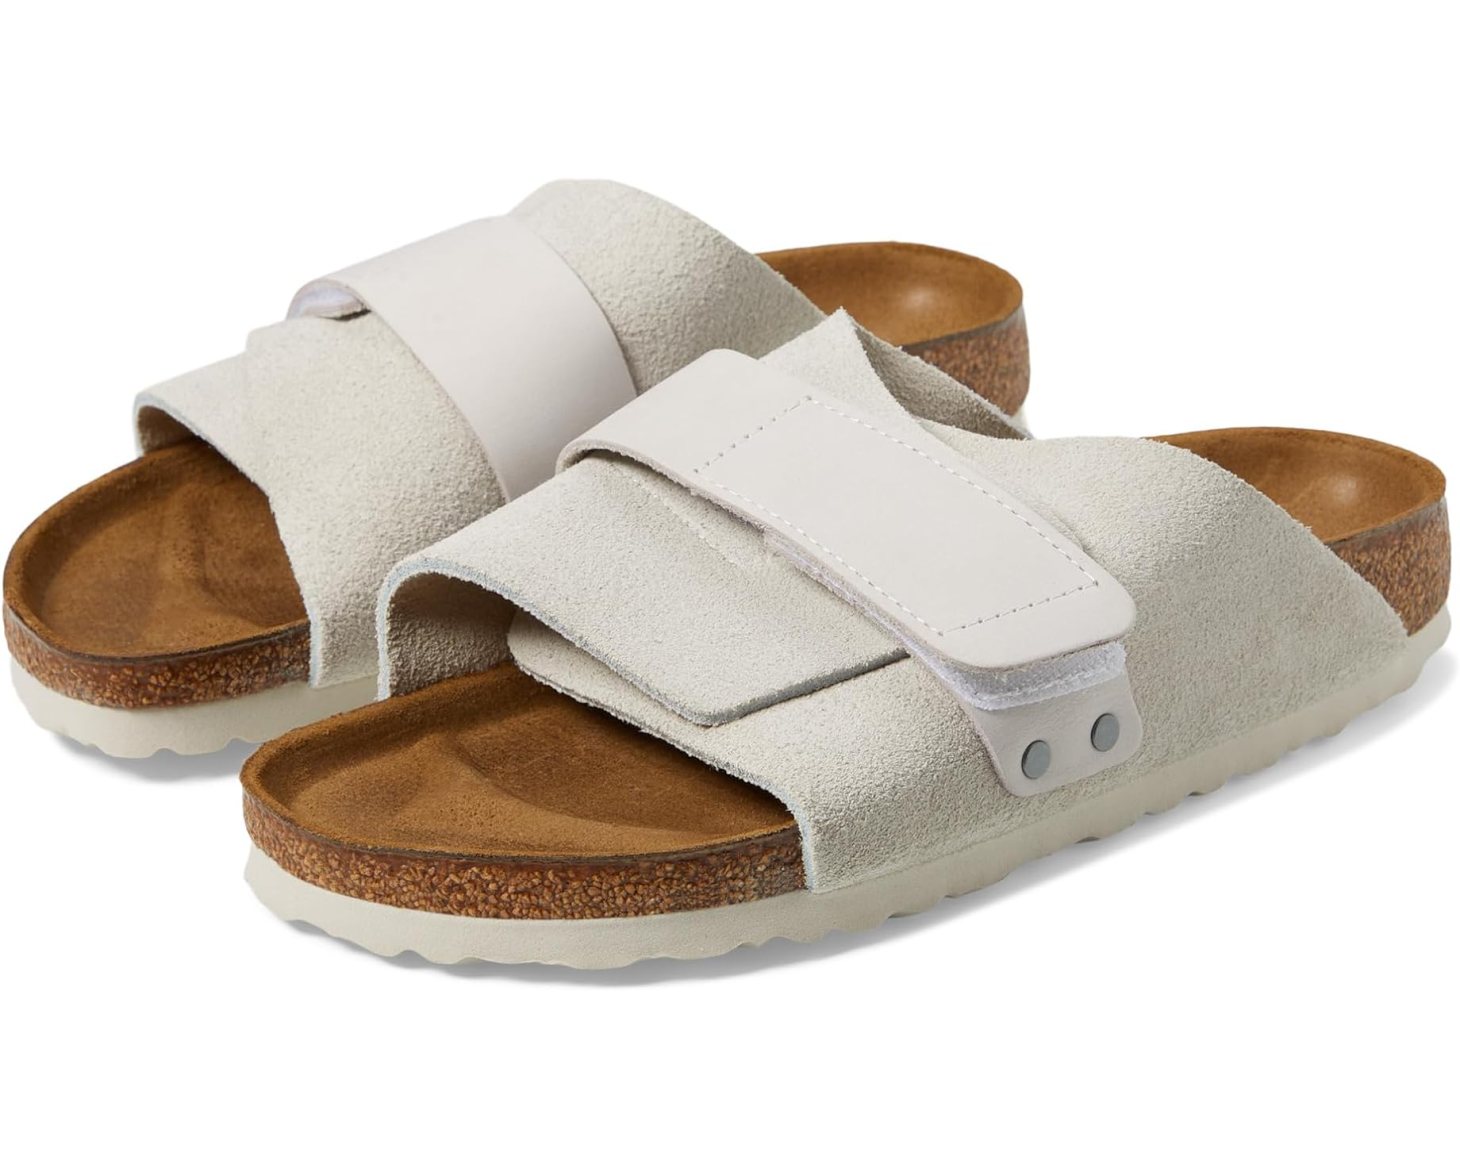 birkenstock kyoto, one of the best travel sandals